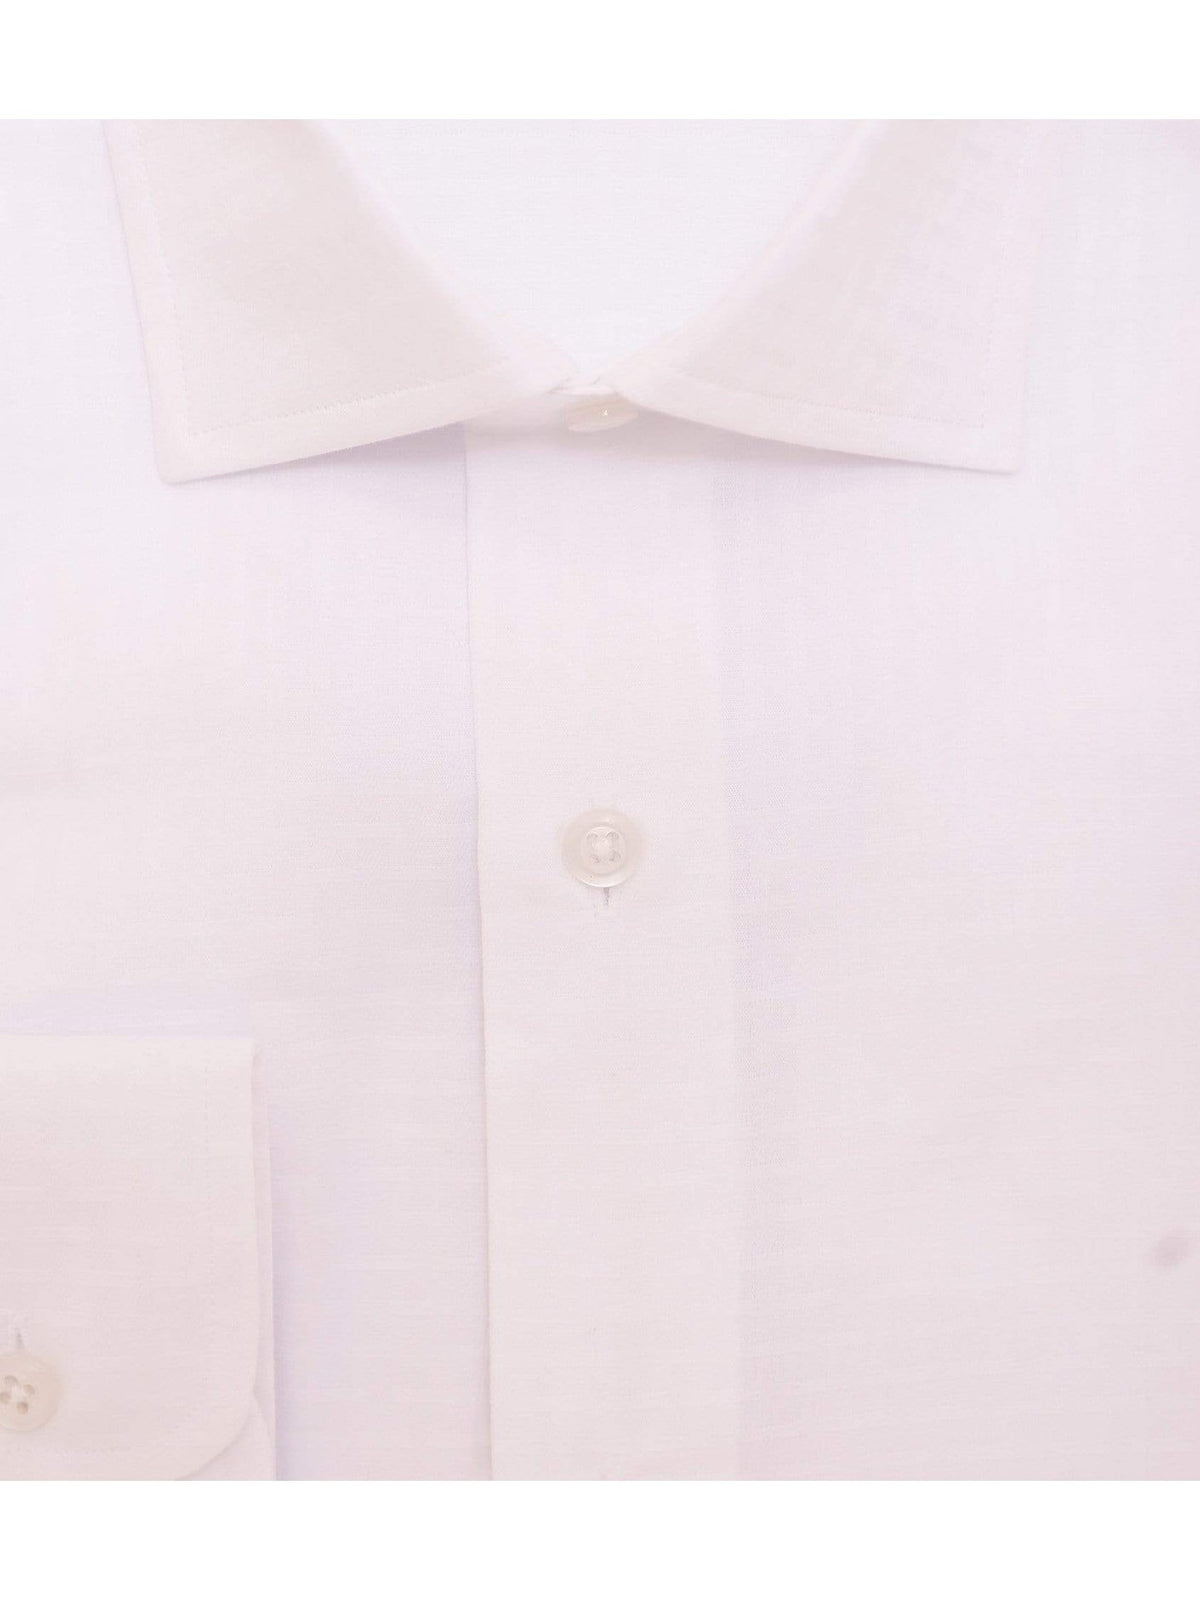 Modena SHIRTS Mens Slim Fit White Tonal Basketweave Spread Collar Cotton Dress Shirt